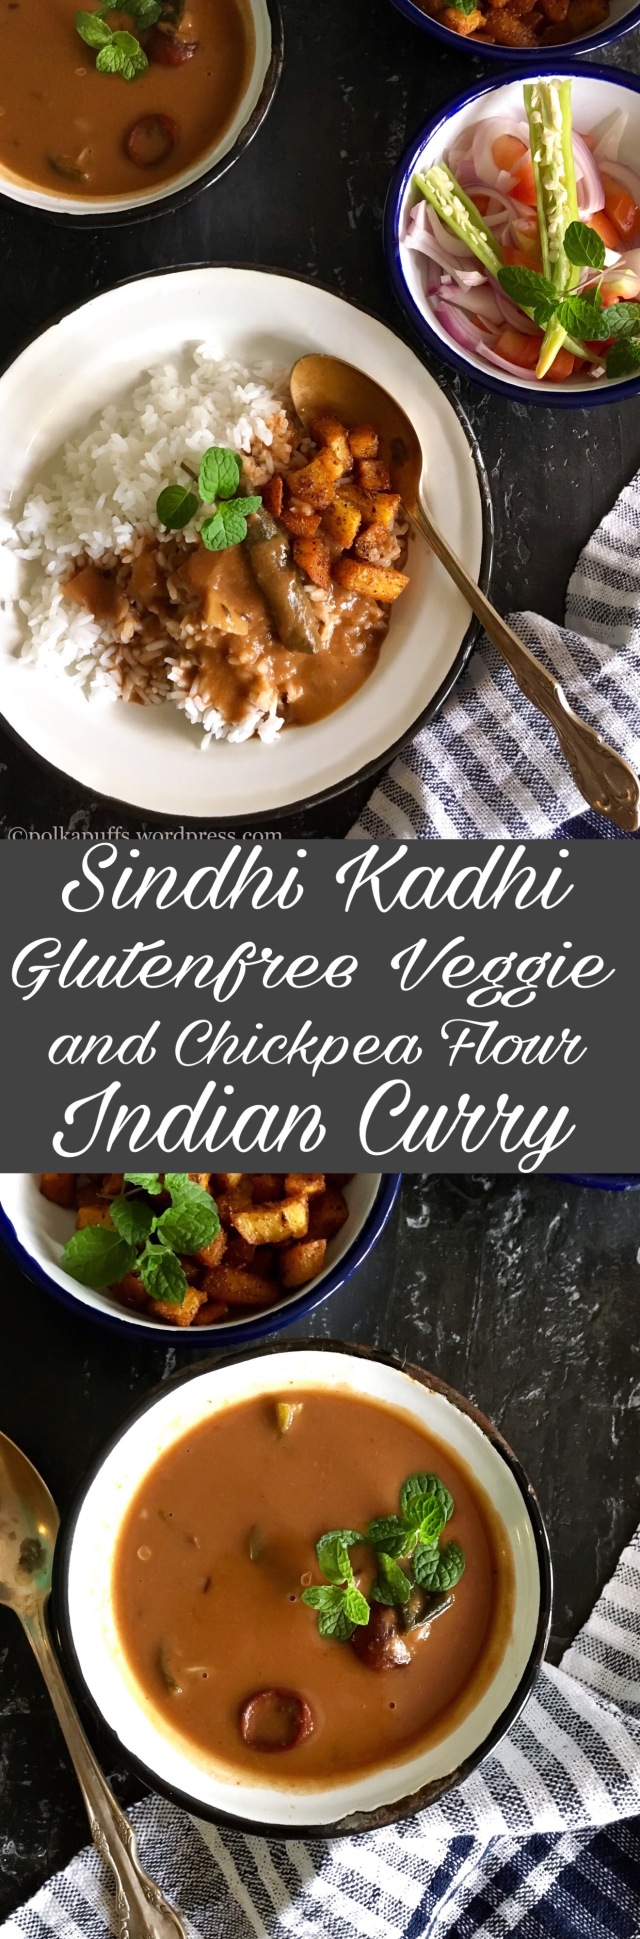 Sindhi Kadhi | Gluten free Veggie and Chick pea Flour Indian Curry